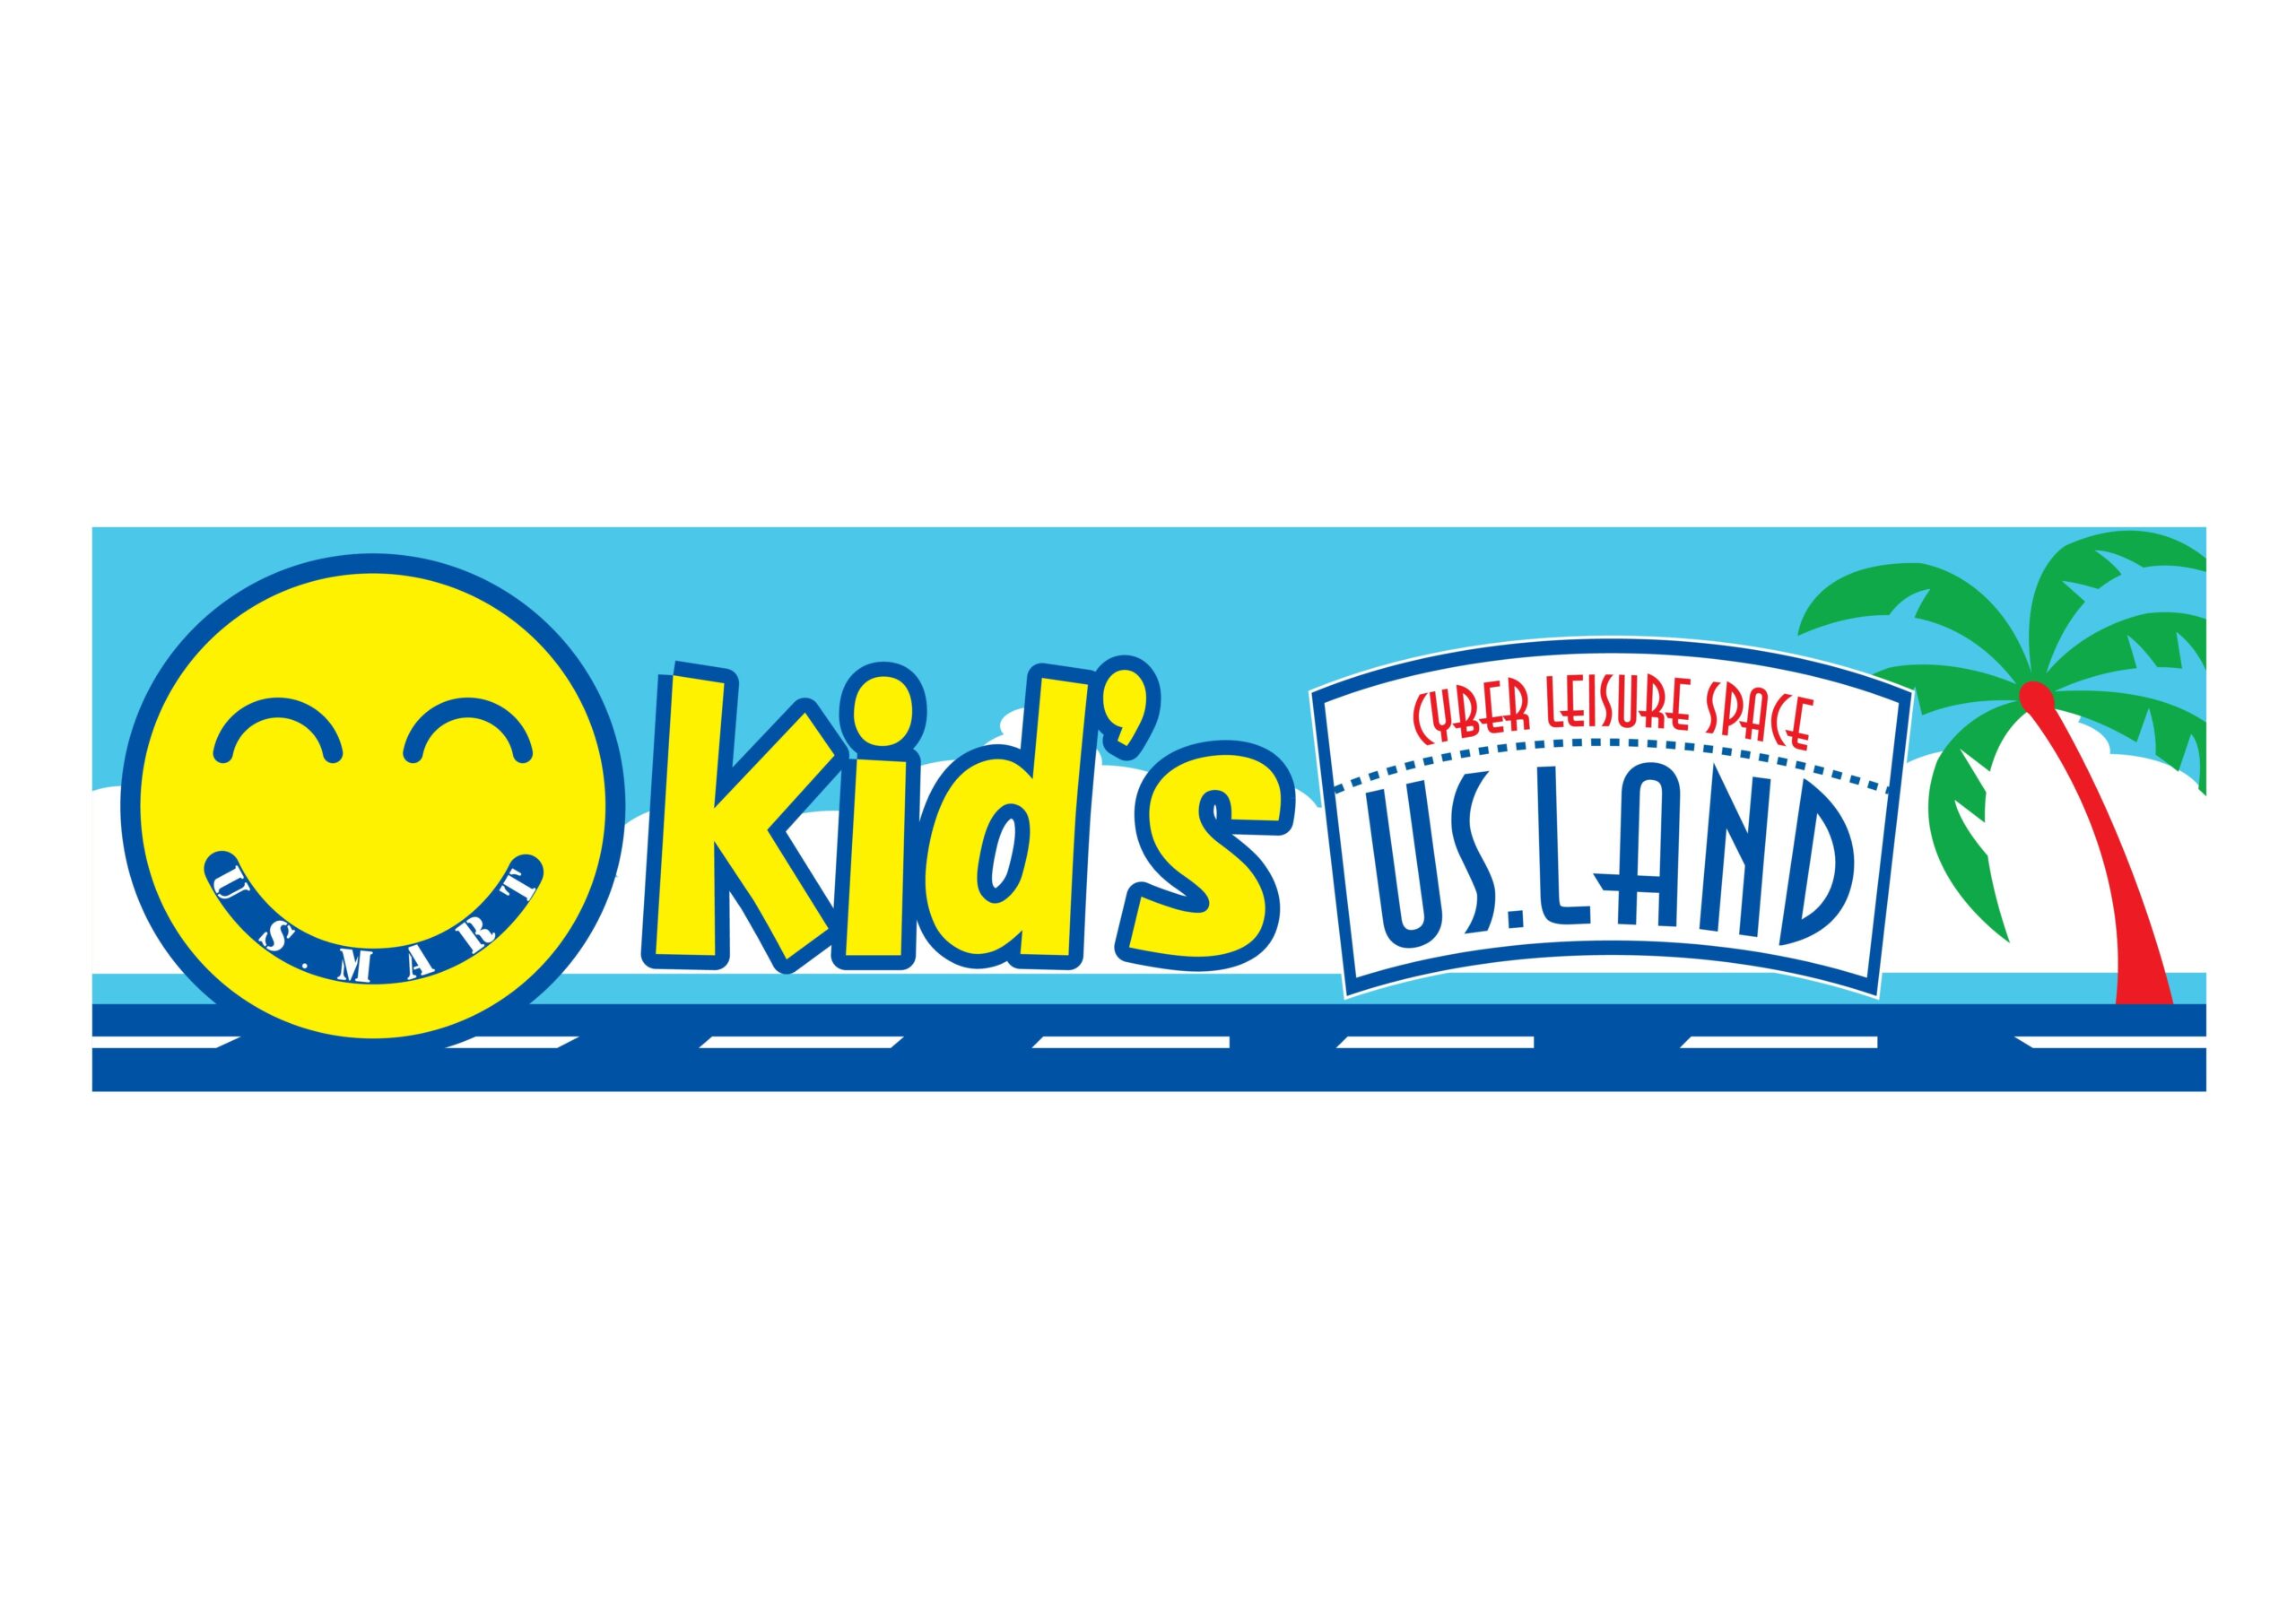 Kid’s US.LAND